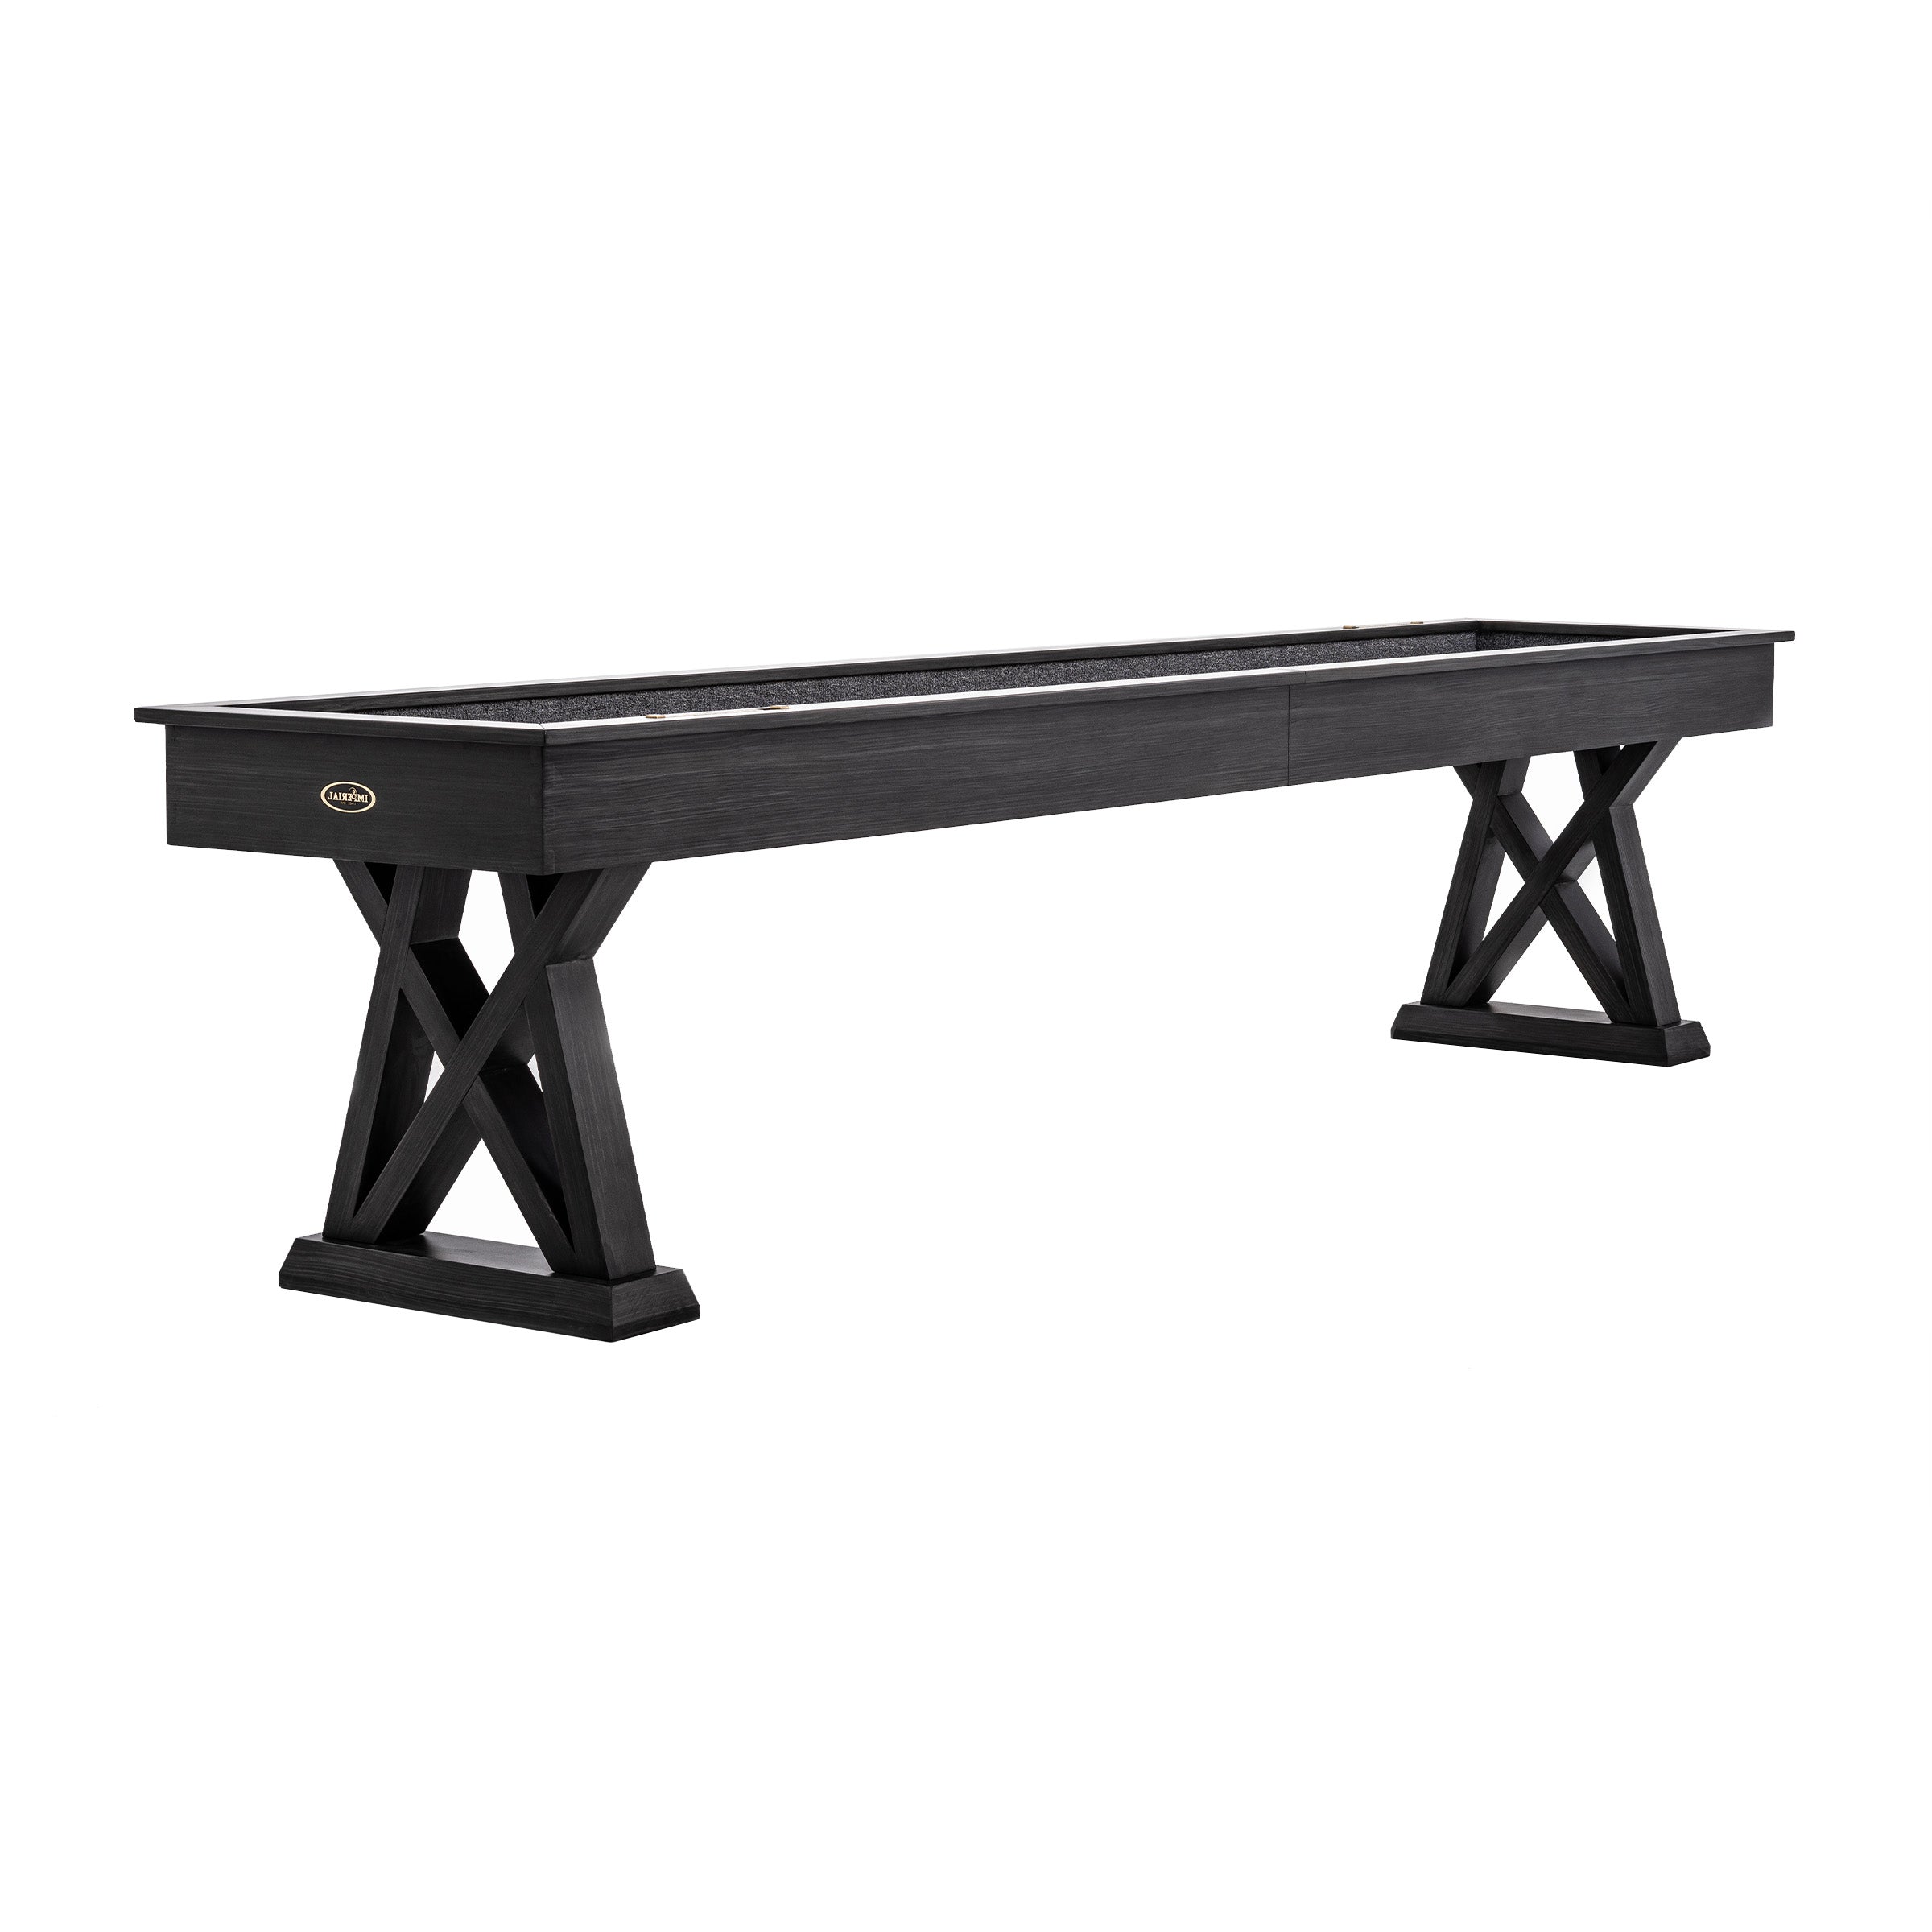 Imperial 12 ft Laredo Kona Shuffleboard Table (0026-0605)